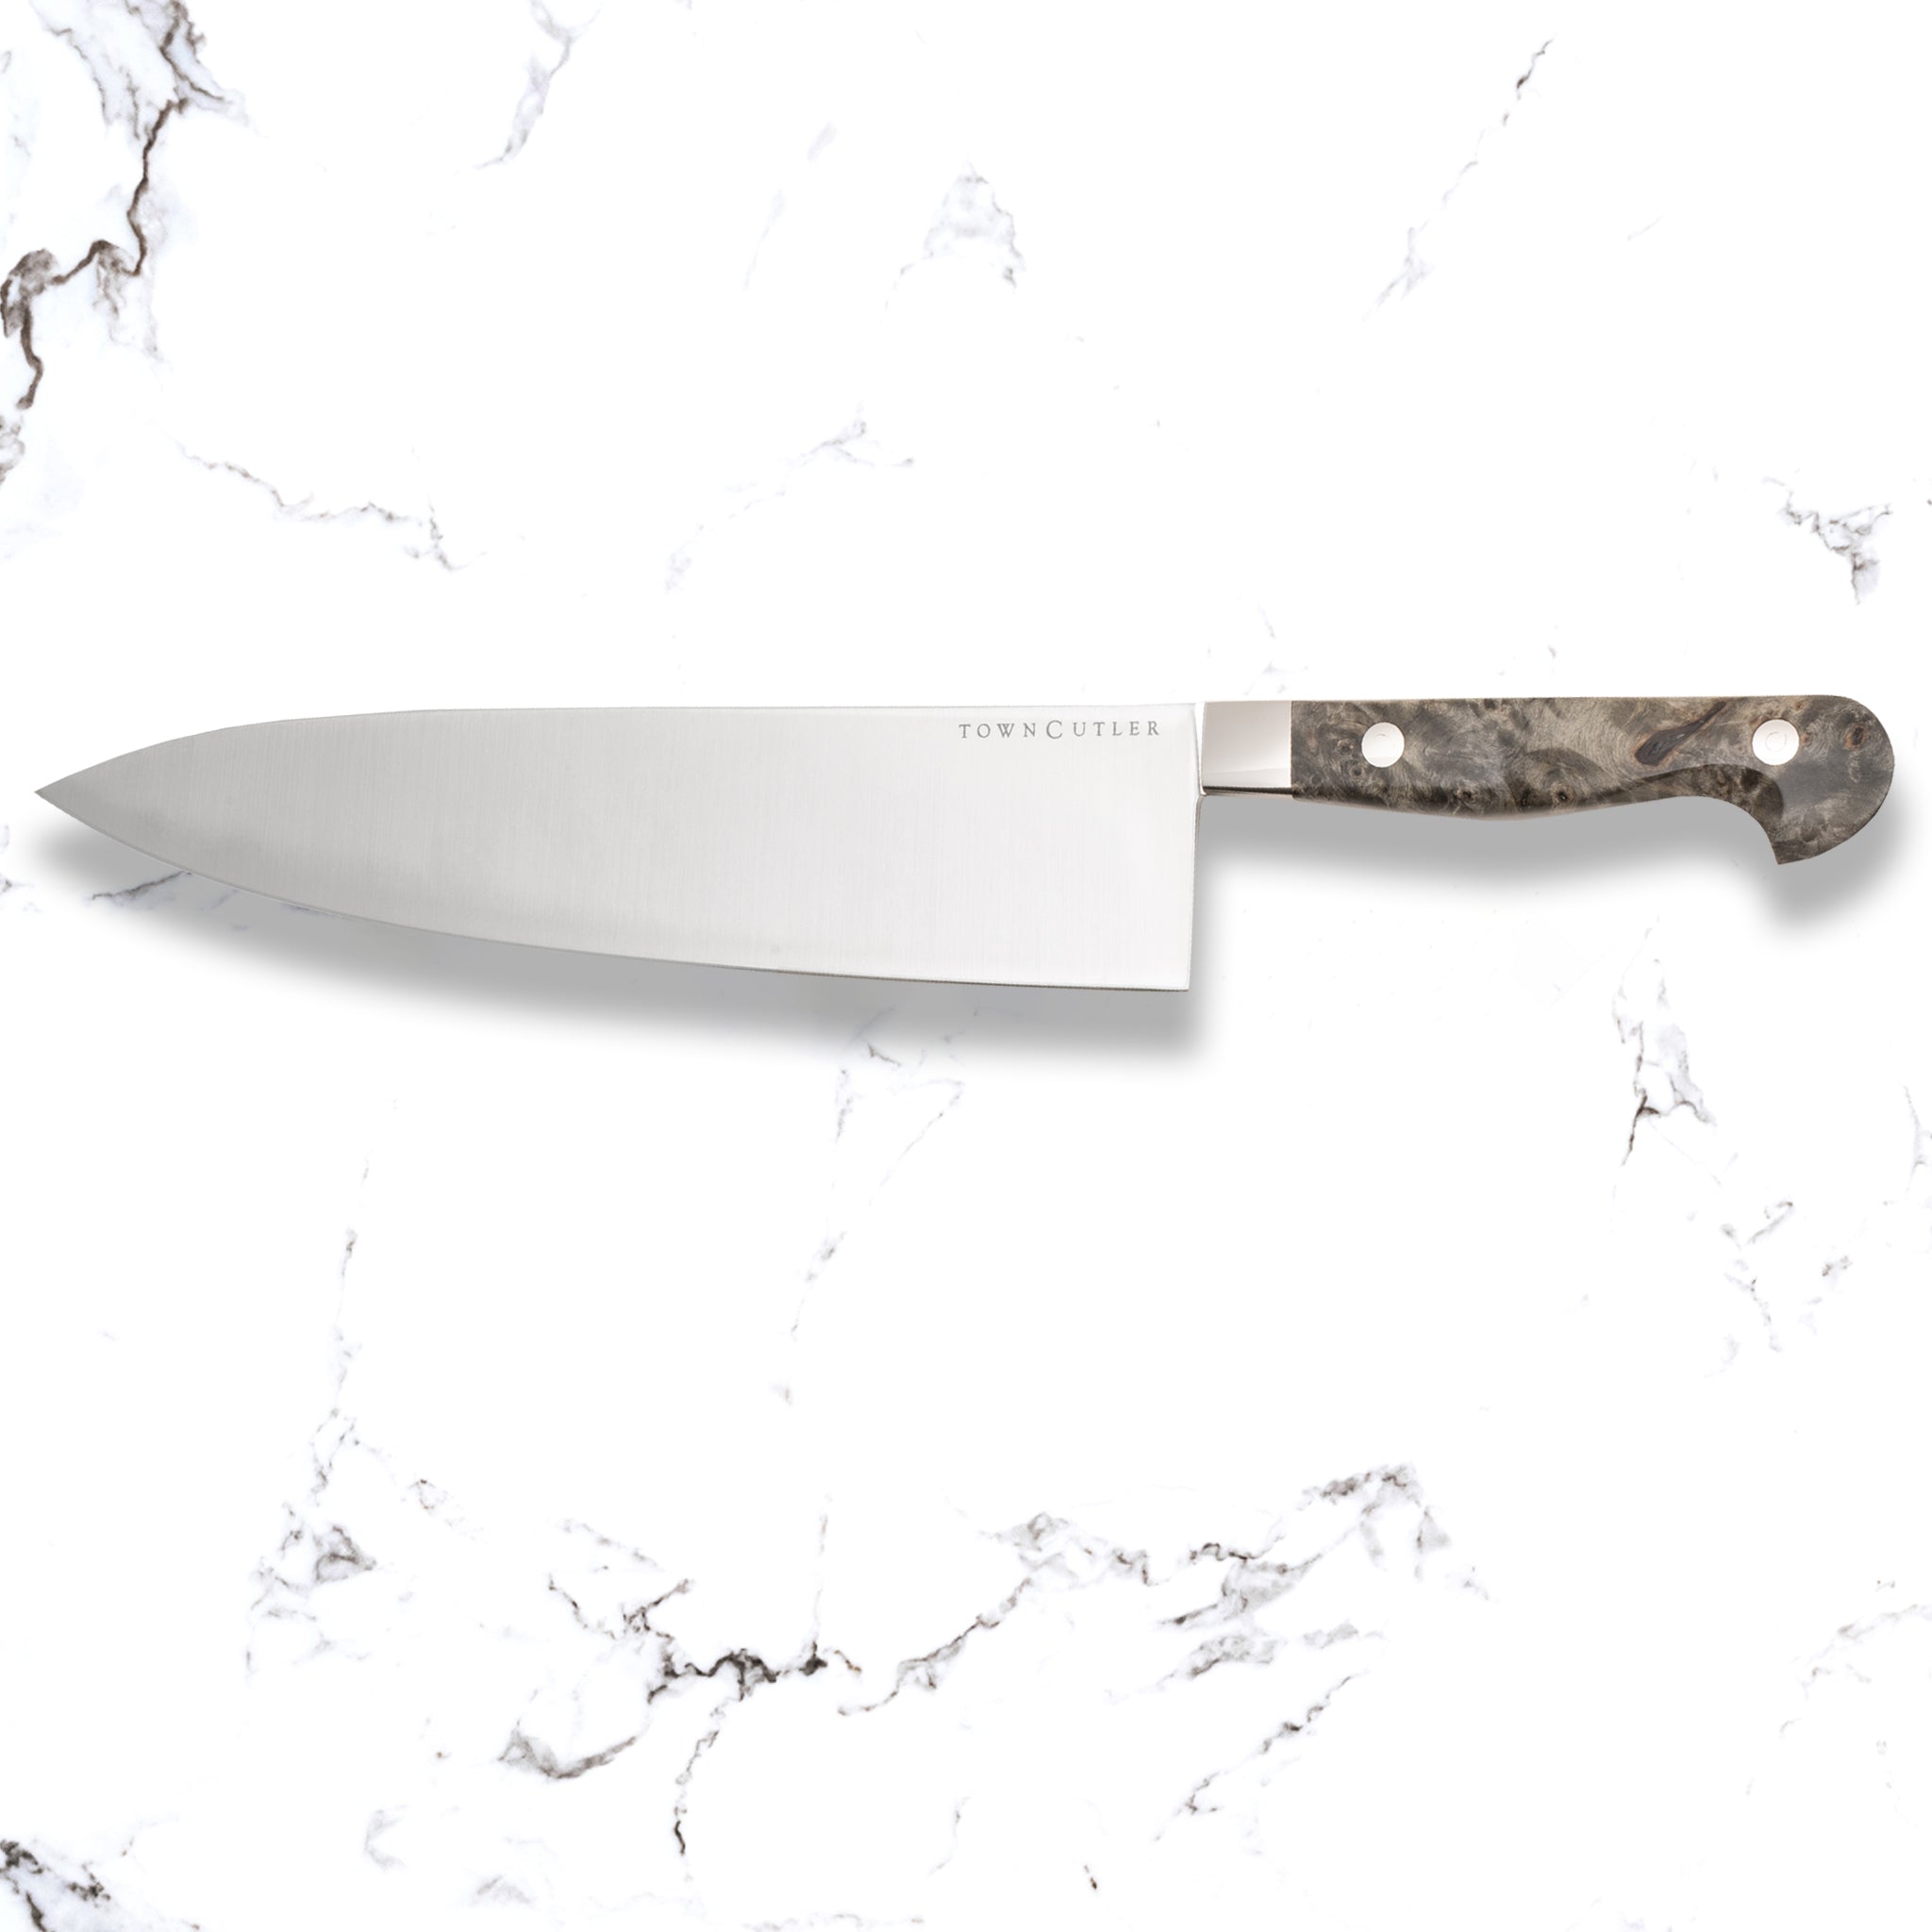 10" Chef Knife - Classic - Town Cutler - Buckeye Burl handle